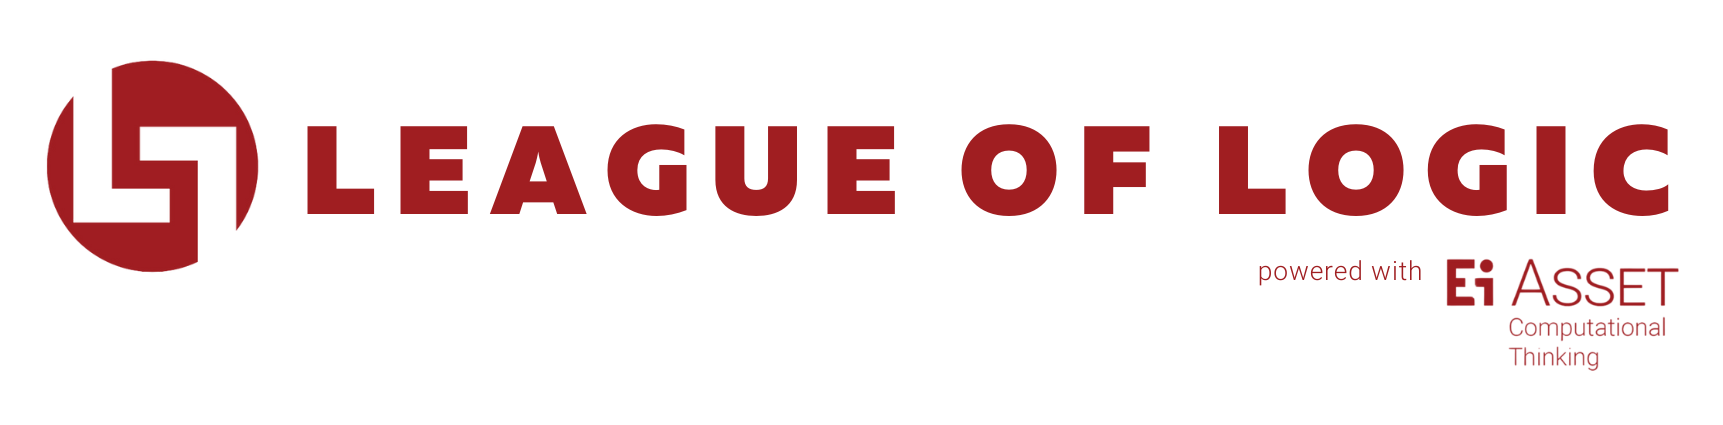 ei-league-logo